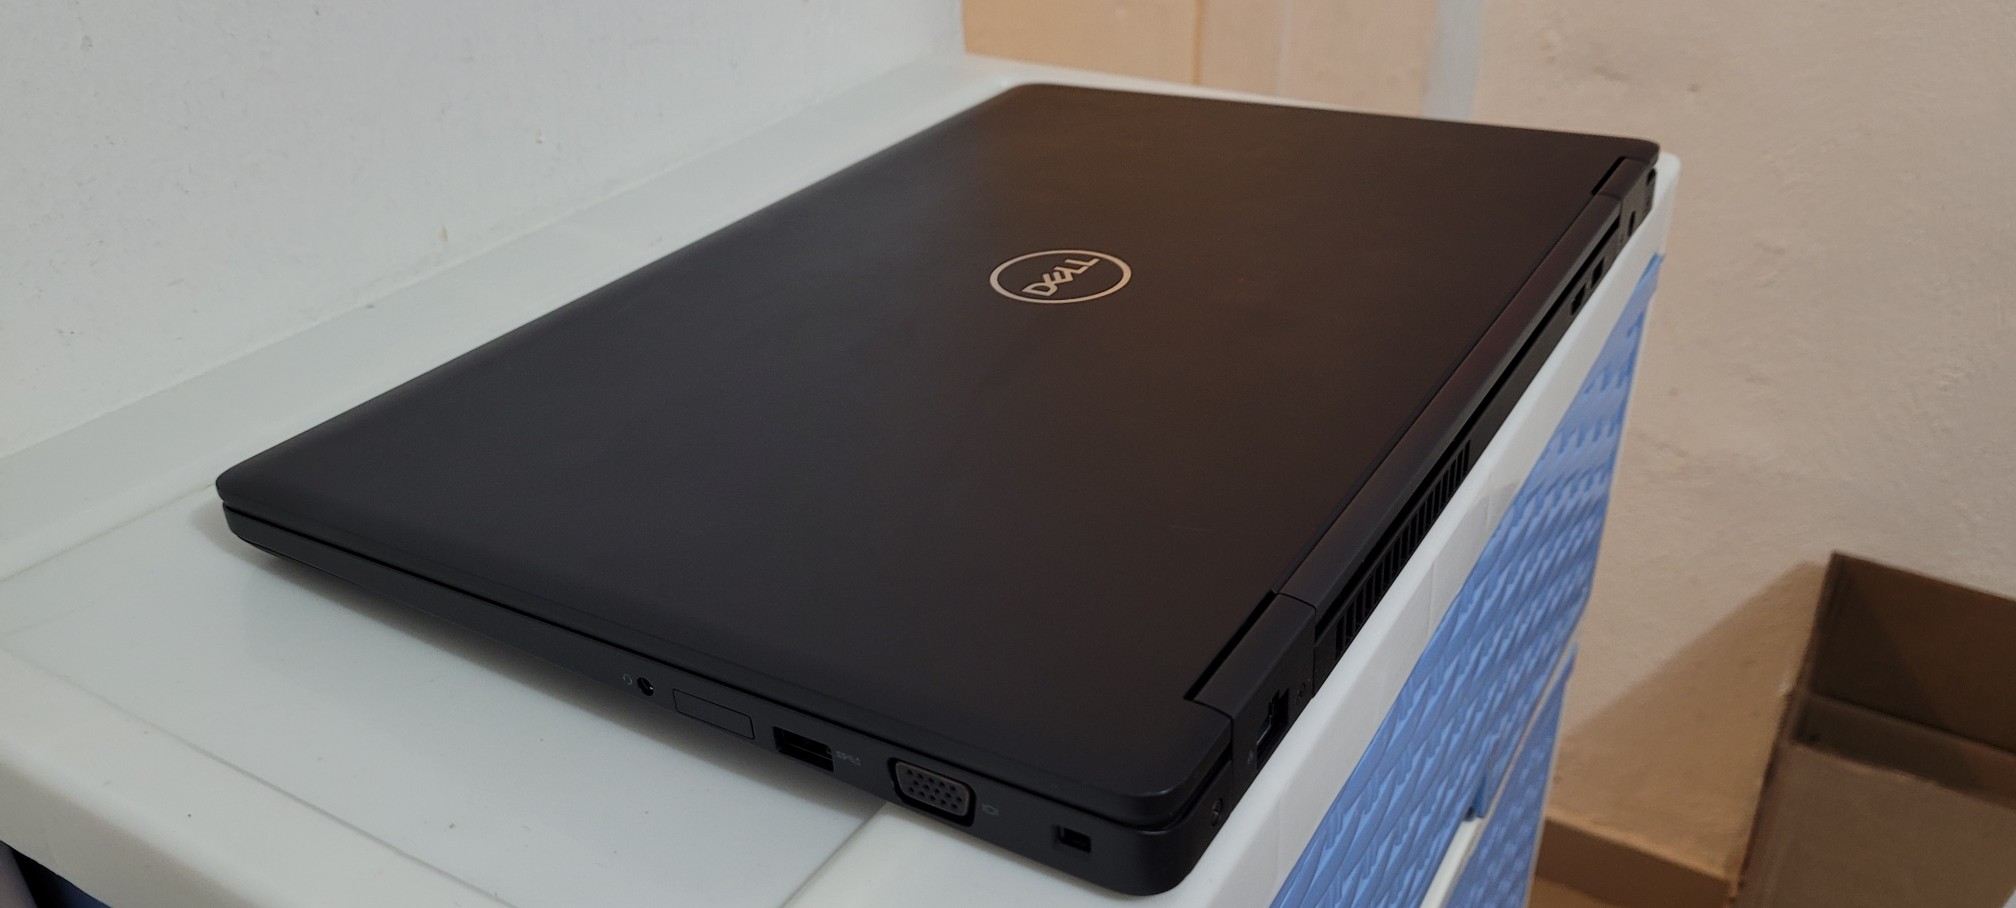 computadoras y laptops - Dell 5591 17 Pulg Core i7 8va Gen Ram 16gb Disco 512gb Nvidea 2gb Dedicada 2